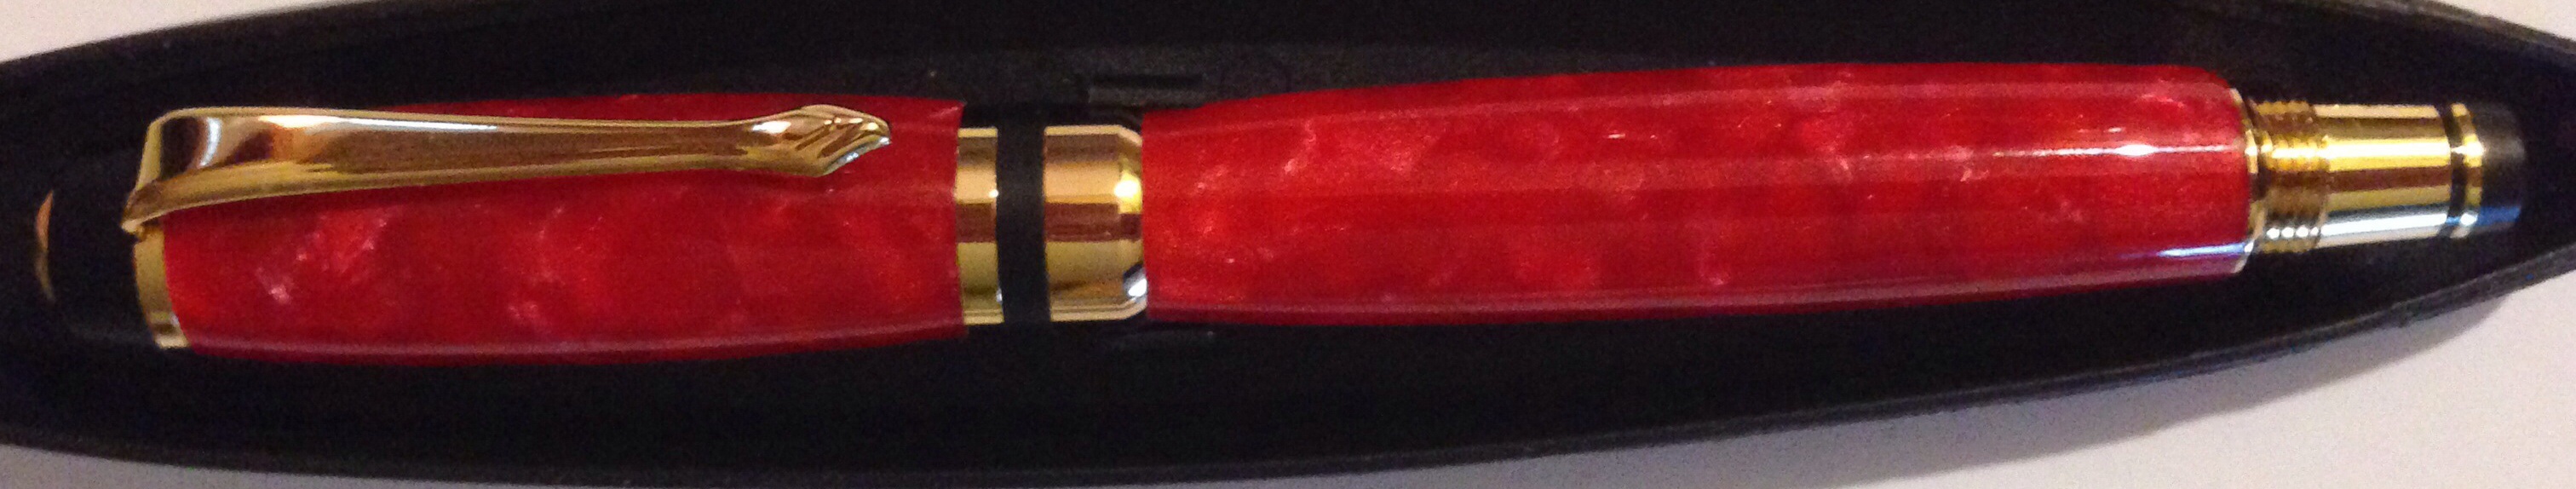 Classic Elite II Pen in Ruby Red acrylic